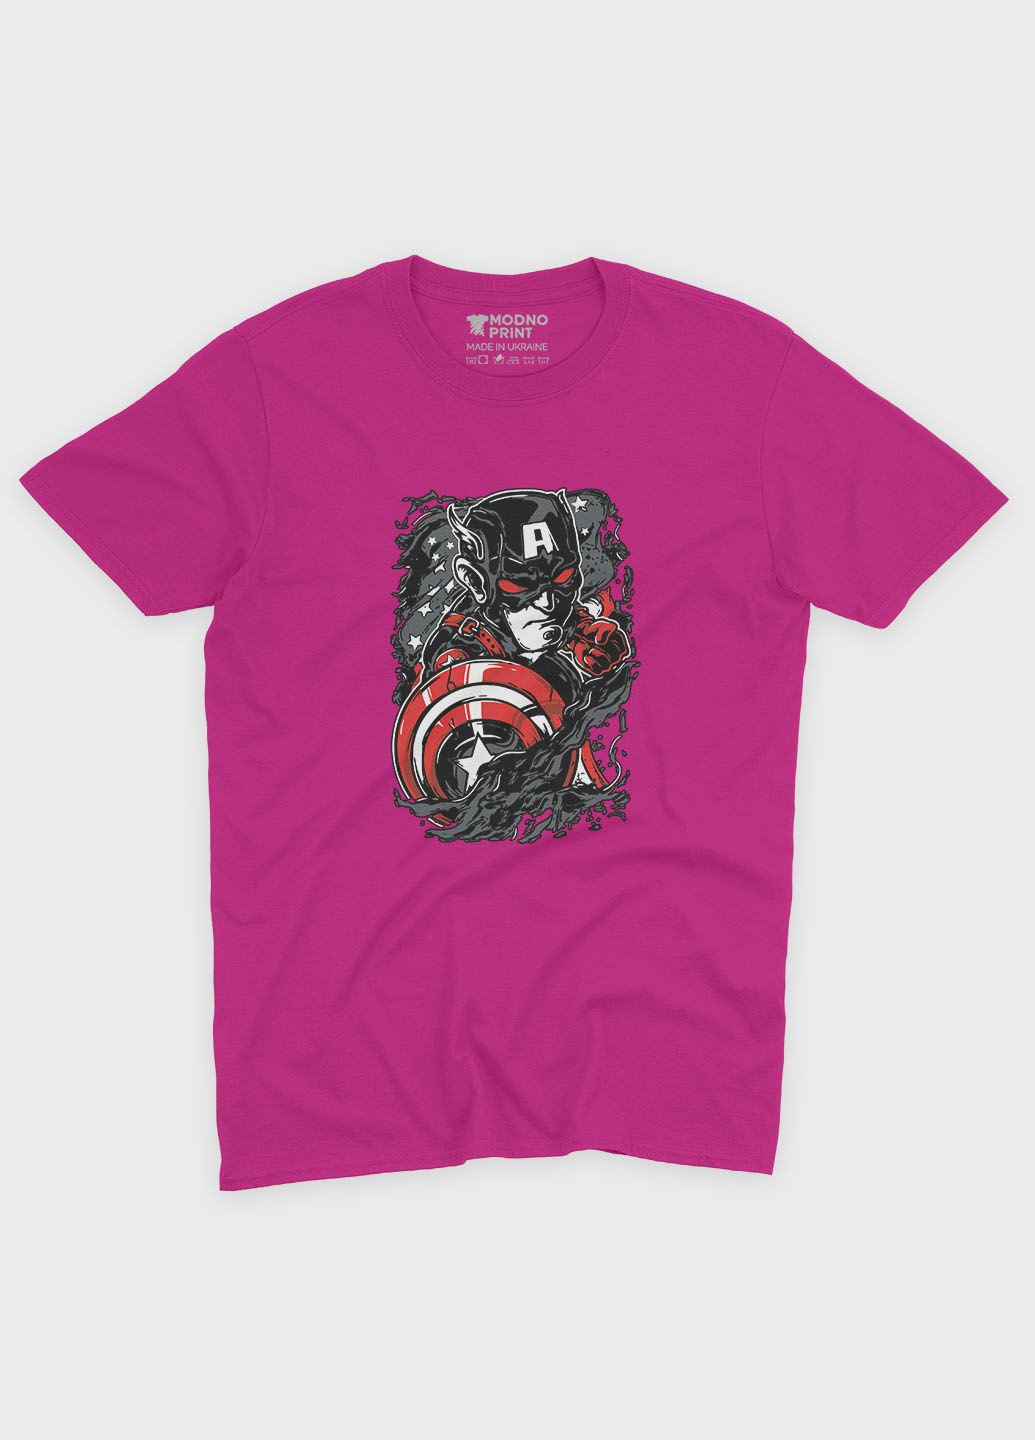 Розовая демисезонная футболка для девочки с принтом супергероя - капитан америка (ts001-1-fuxj-006-022-013-g) Modno